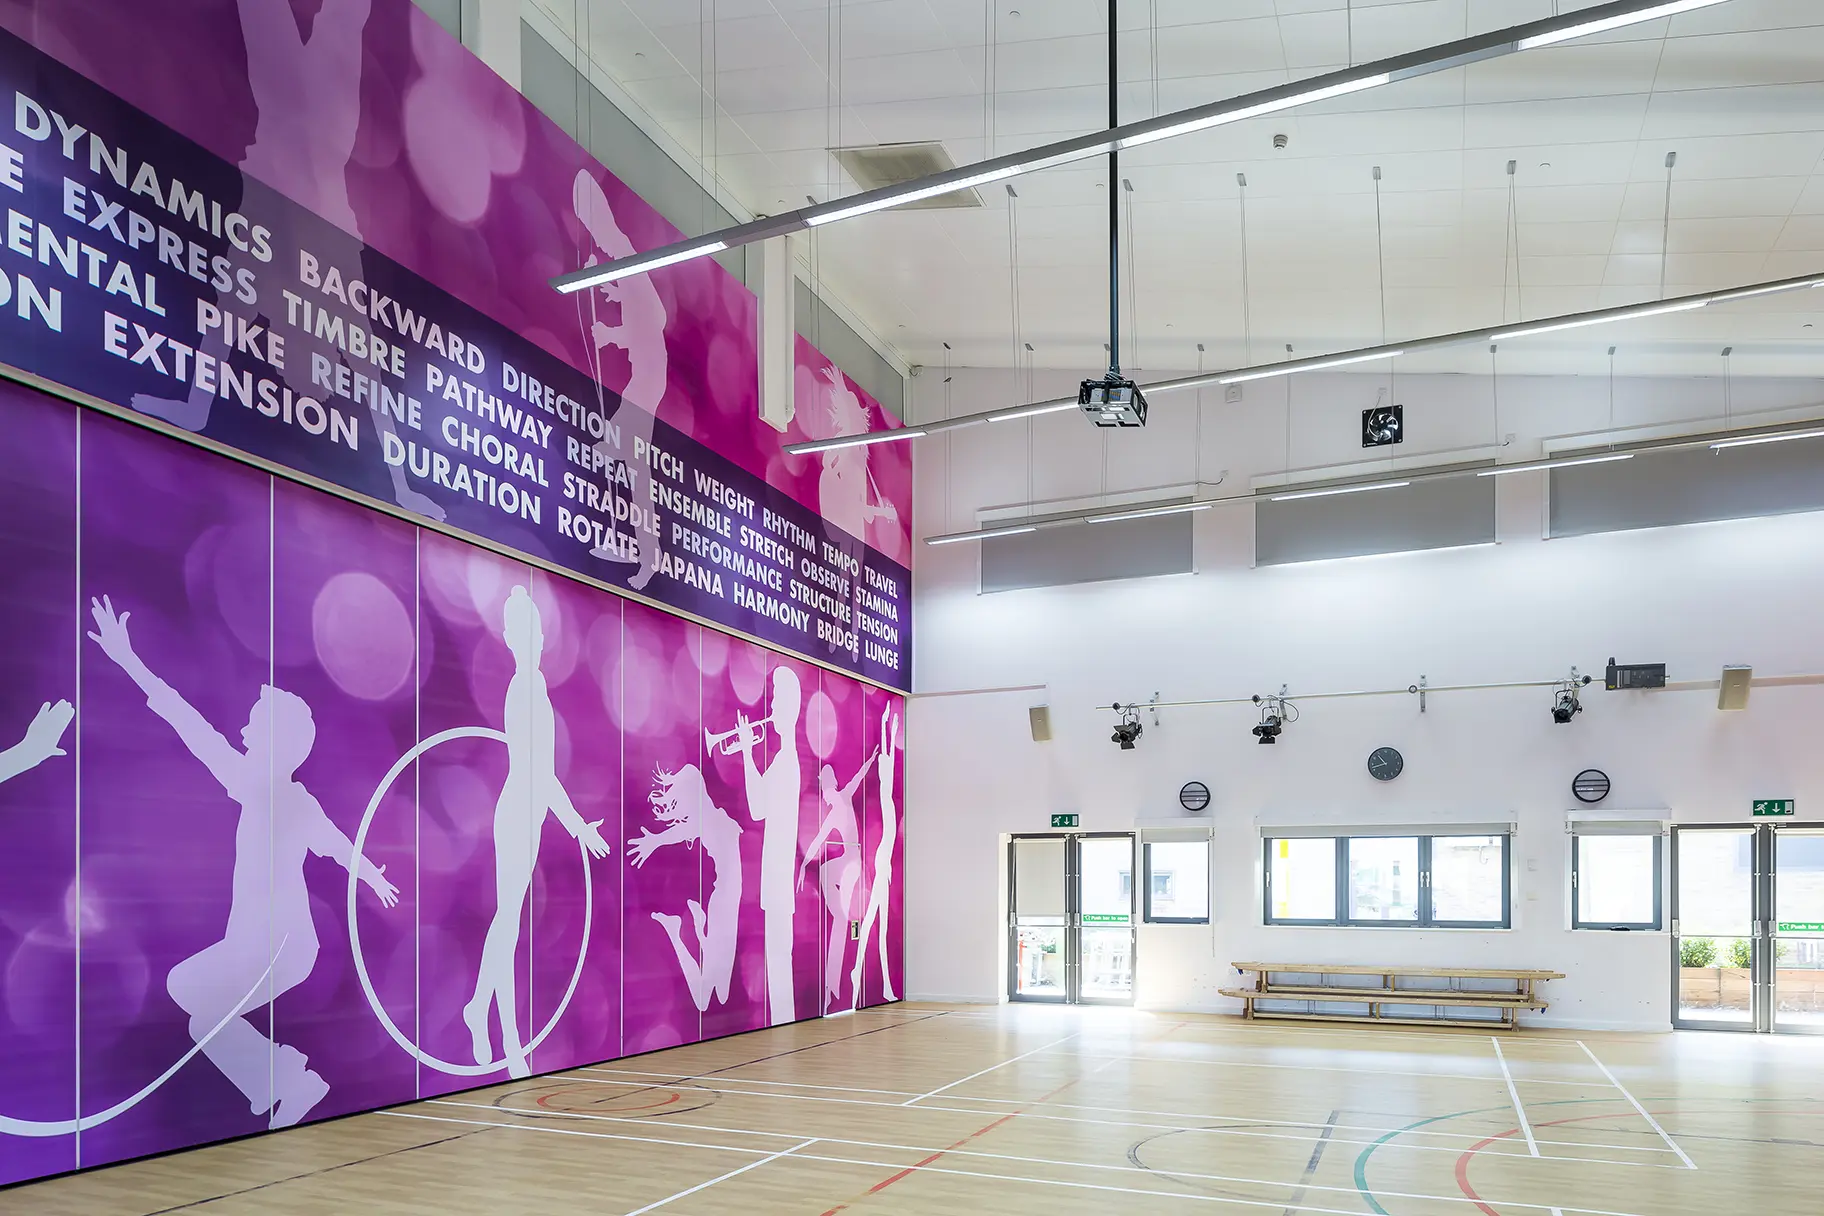 Churchfield Junior School sport themed wall art